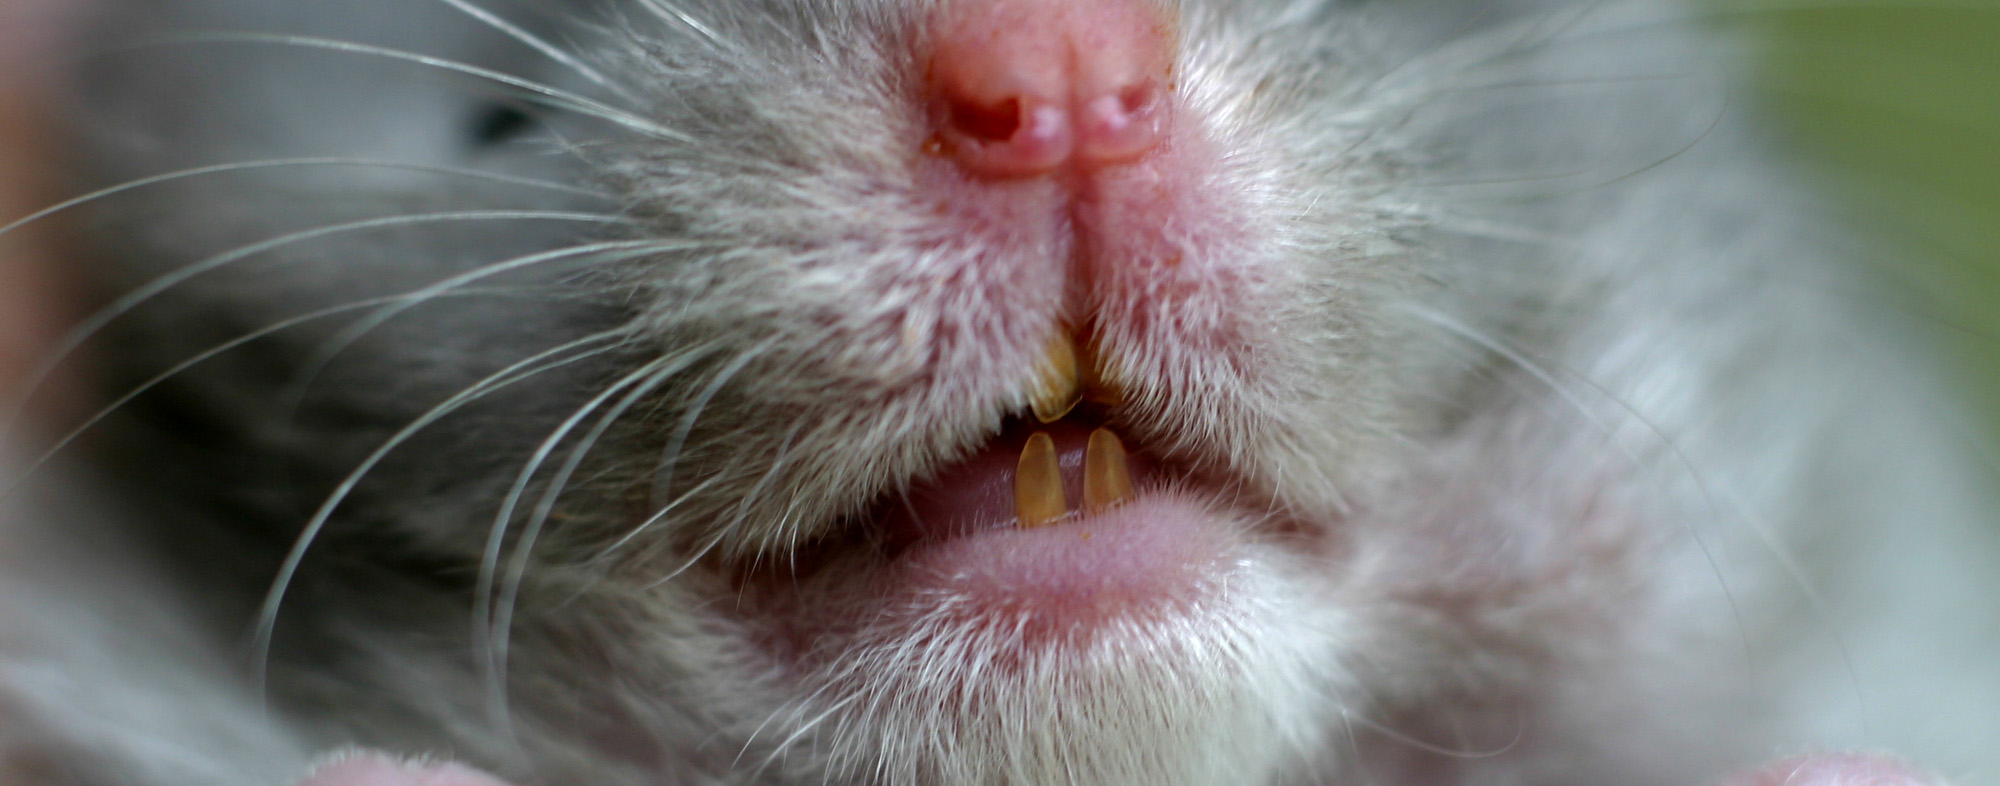 Small Pet Dental Care: How to Clip Overgrown Teeth | Hartz